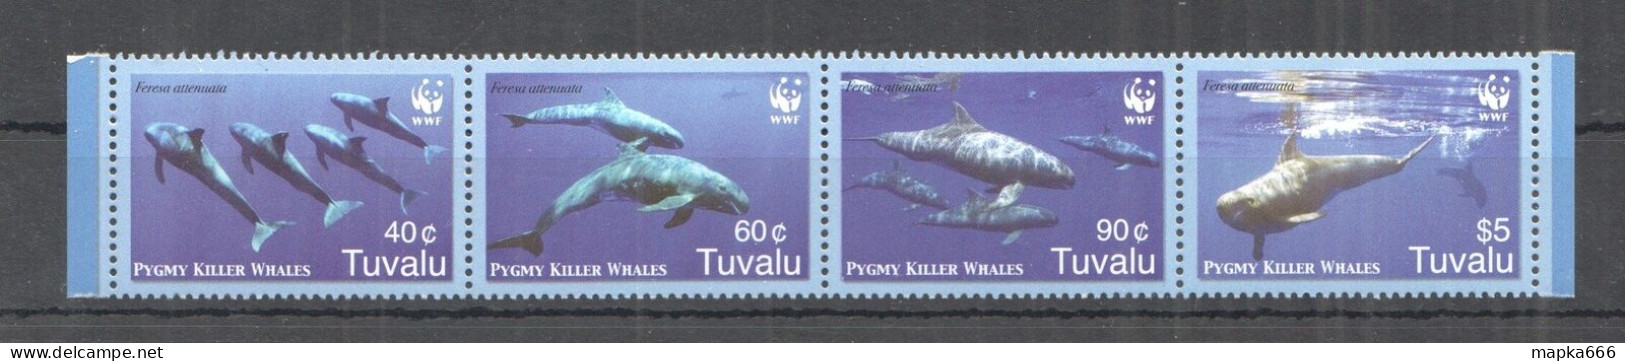 B1339 2006 Tuvalu Wwf Marine Life Pygmy Killer Whale Set Mnh - Meereswelt